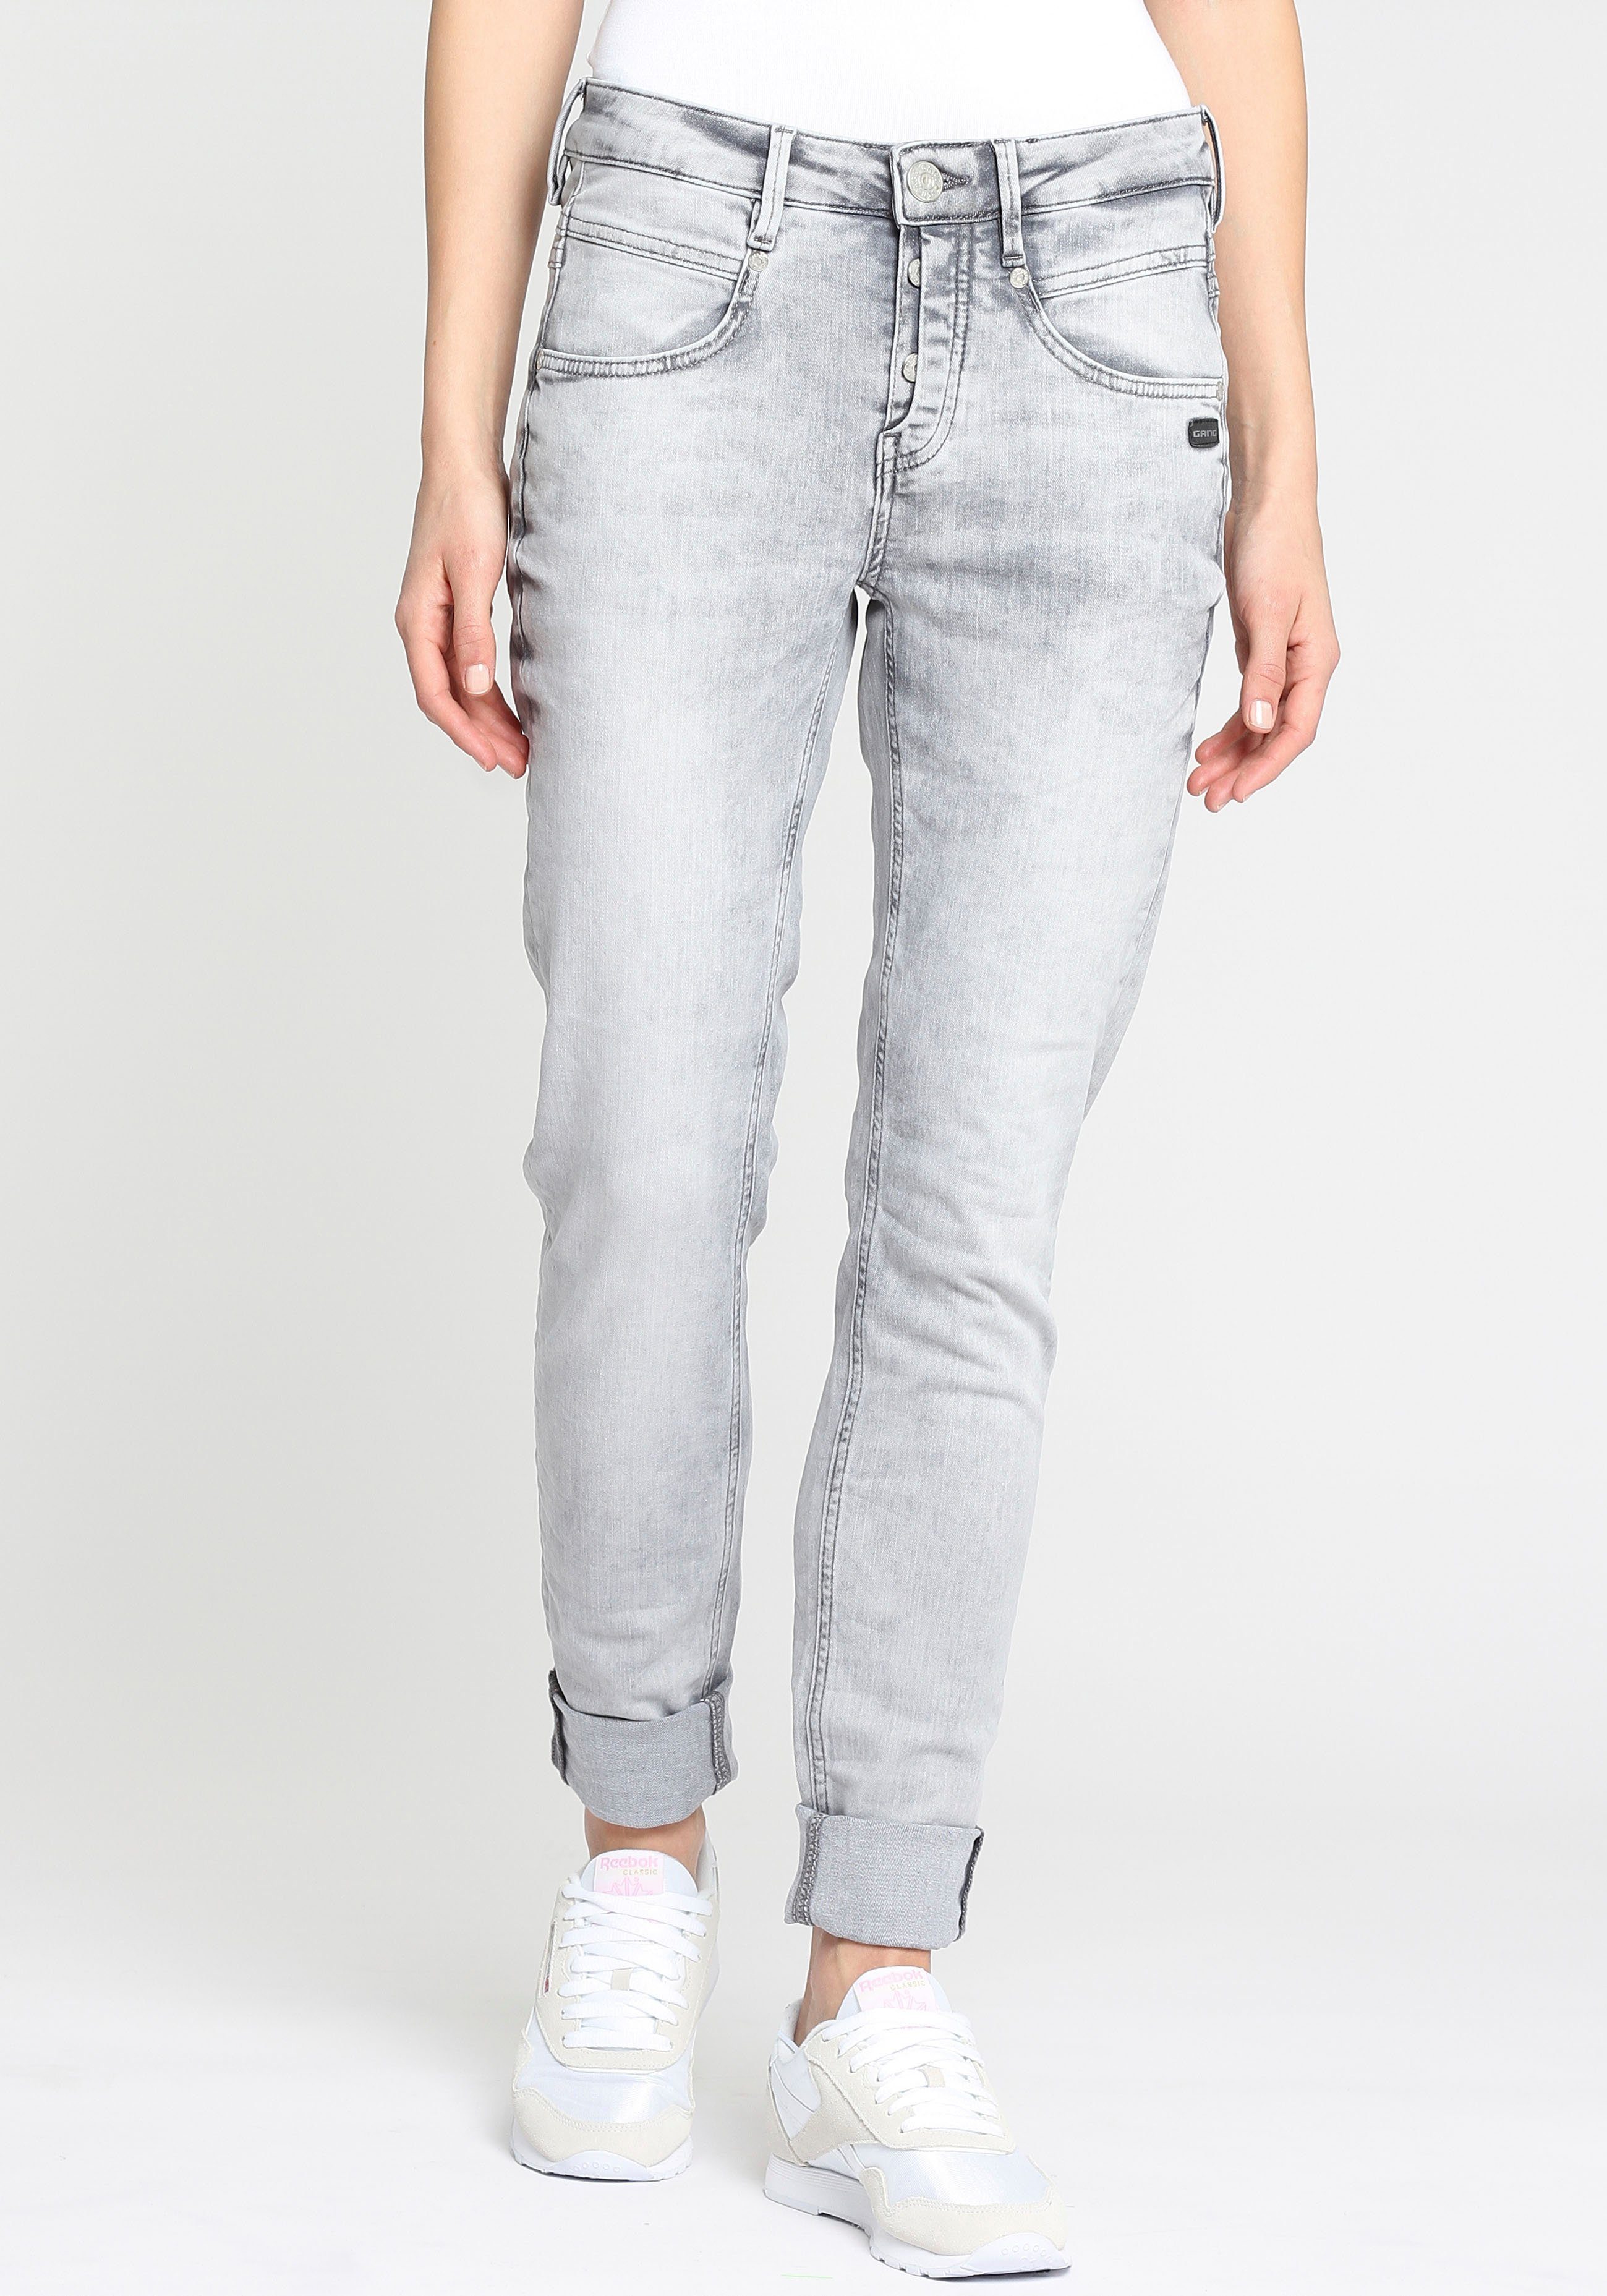 GANG Skinny-fit-Jeans 94Medina mit stylischer halb offener Knopfleiste,  Cooler Style - lang oder gekrempelt ein echter Hingucker